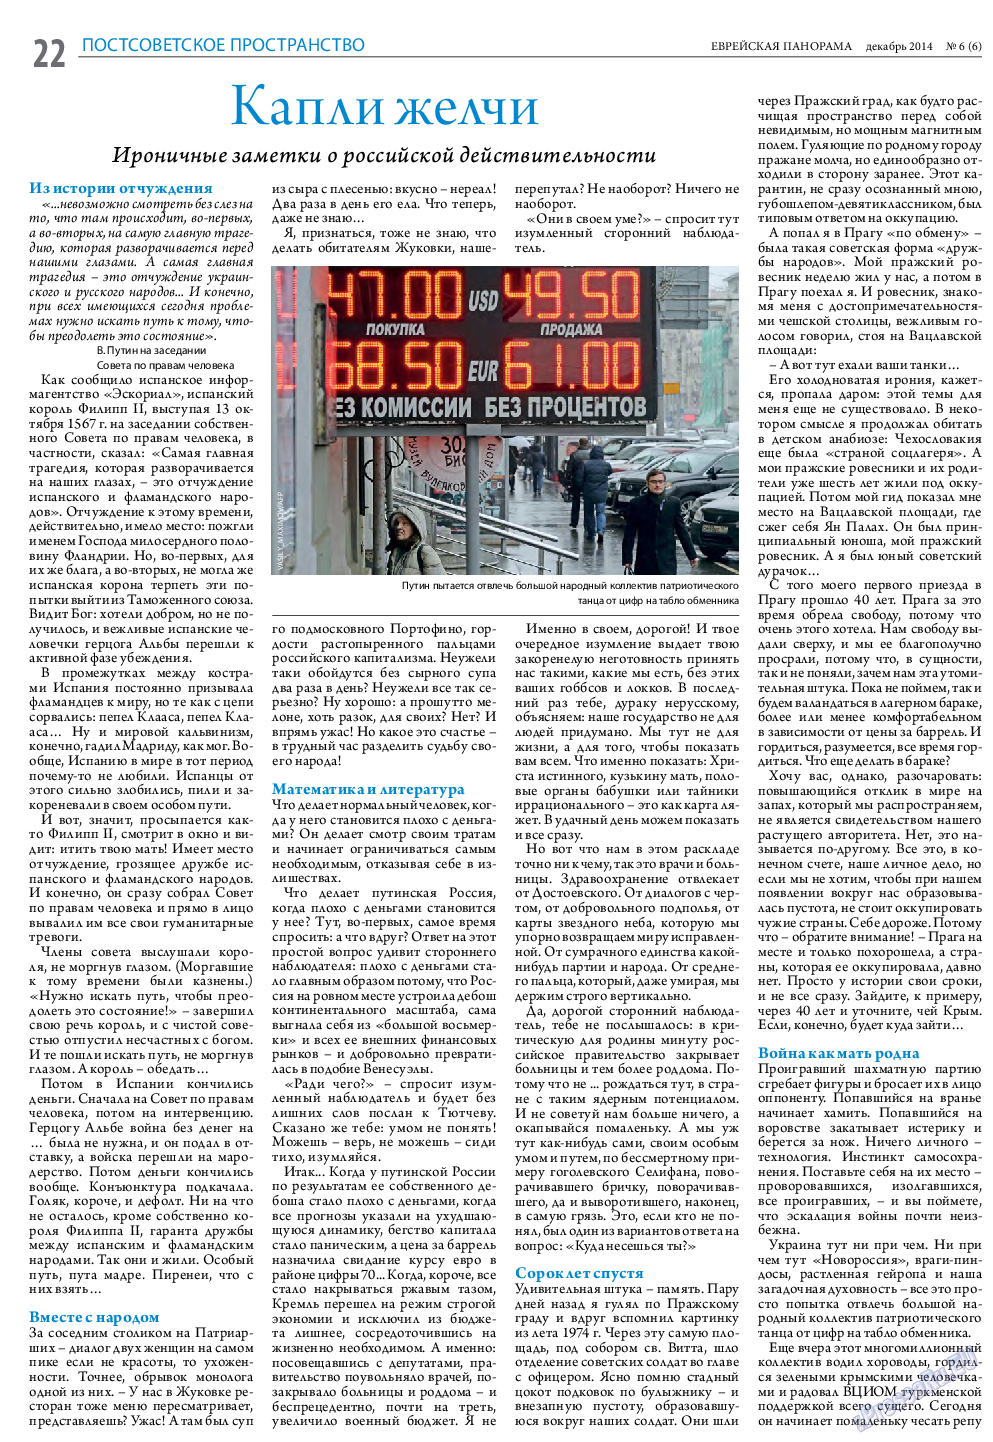 Еврейская панорама, газета. 2014 №6 стр.22